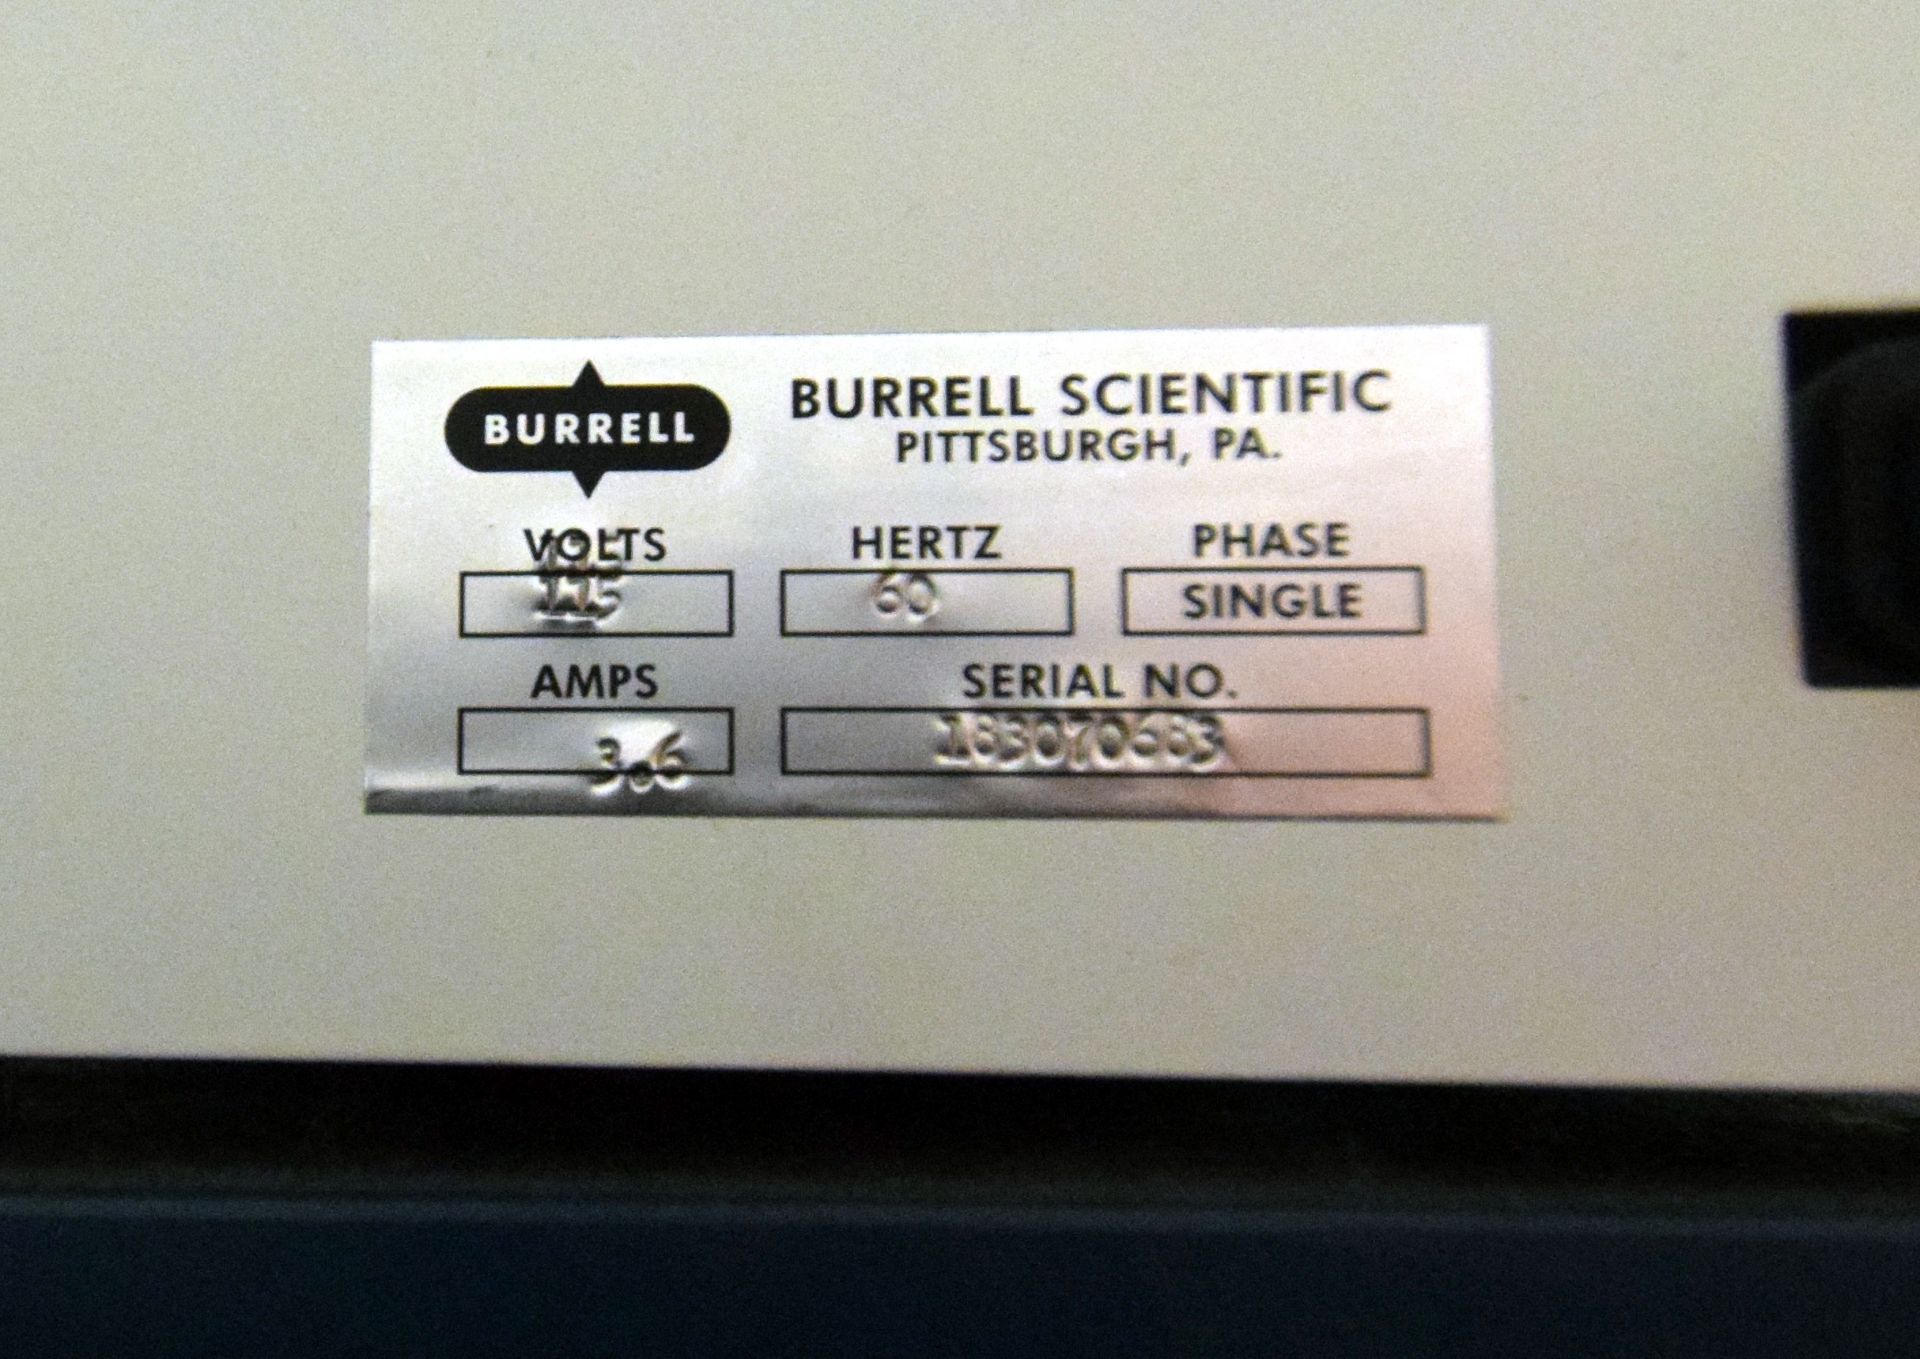 Burrell Scientific Wrist Action Shaker, Model 75, Serial# 183070683. LOADING FEE $25 - Image 4 of 4